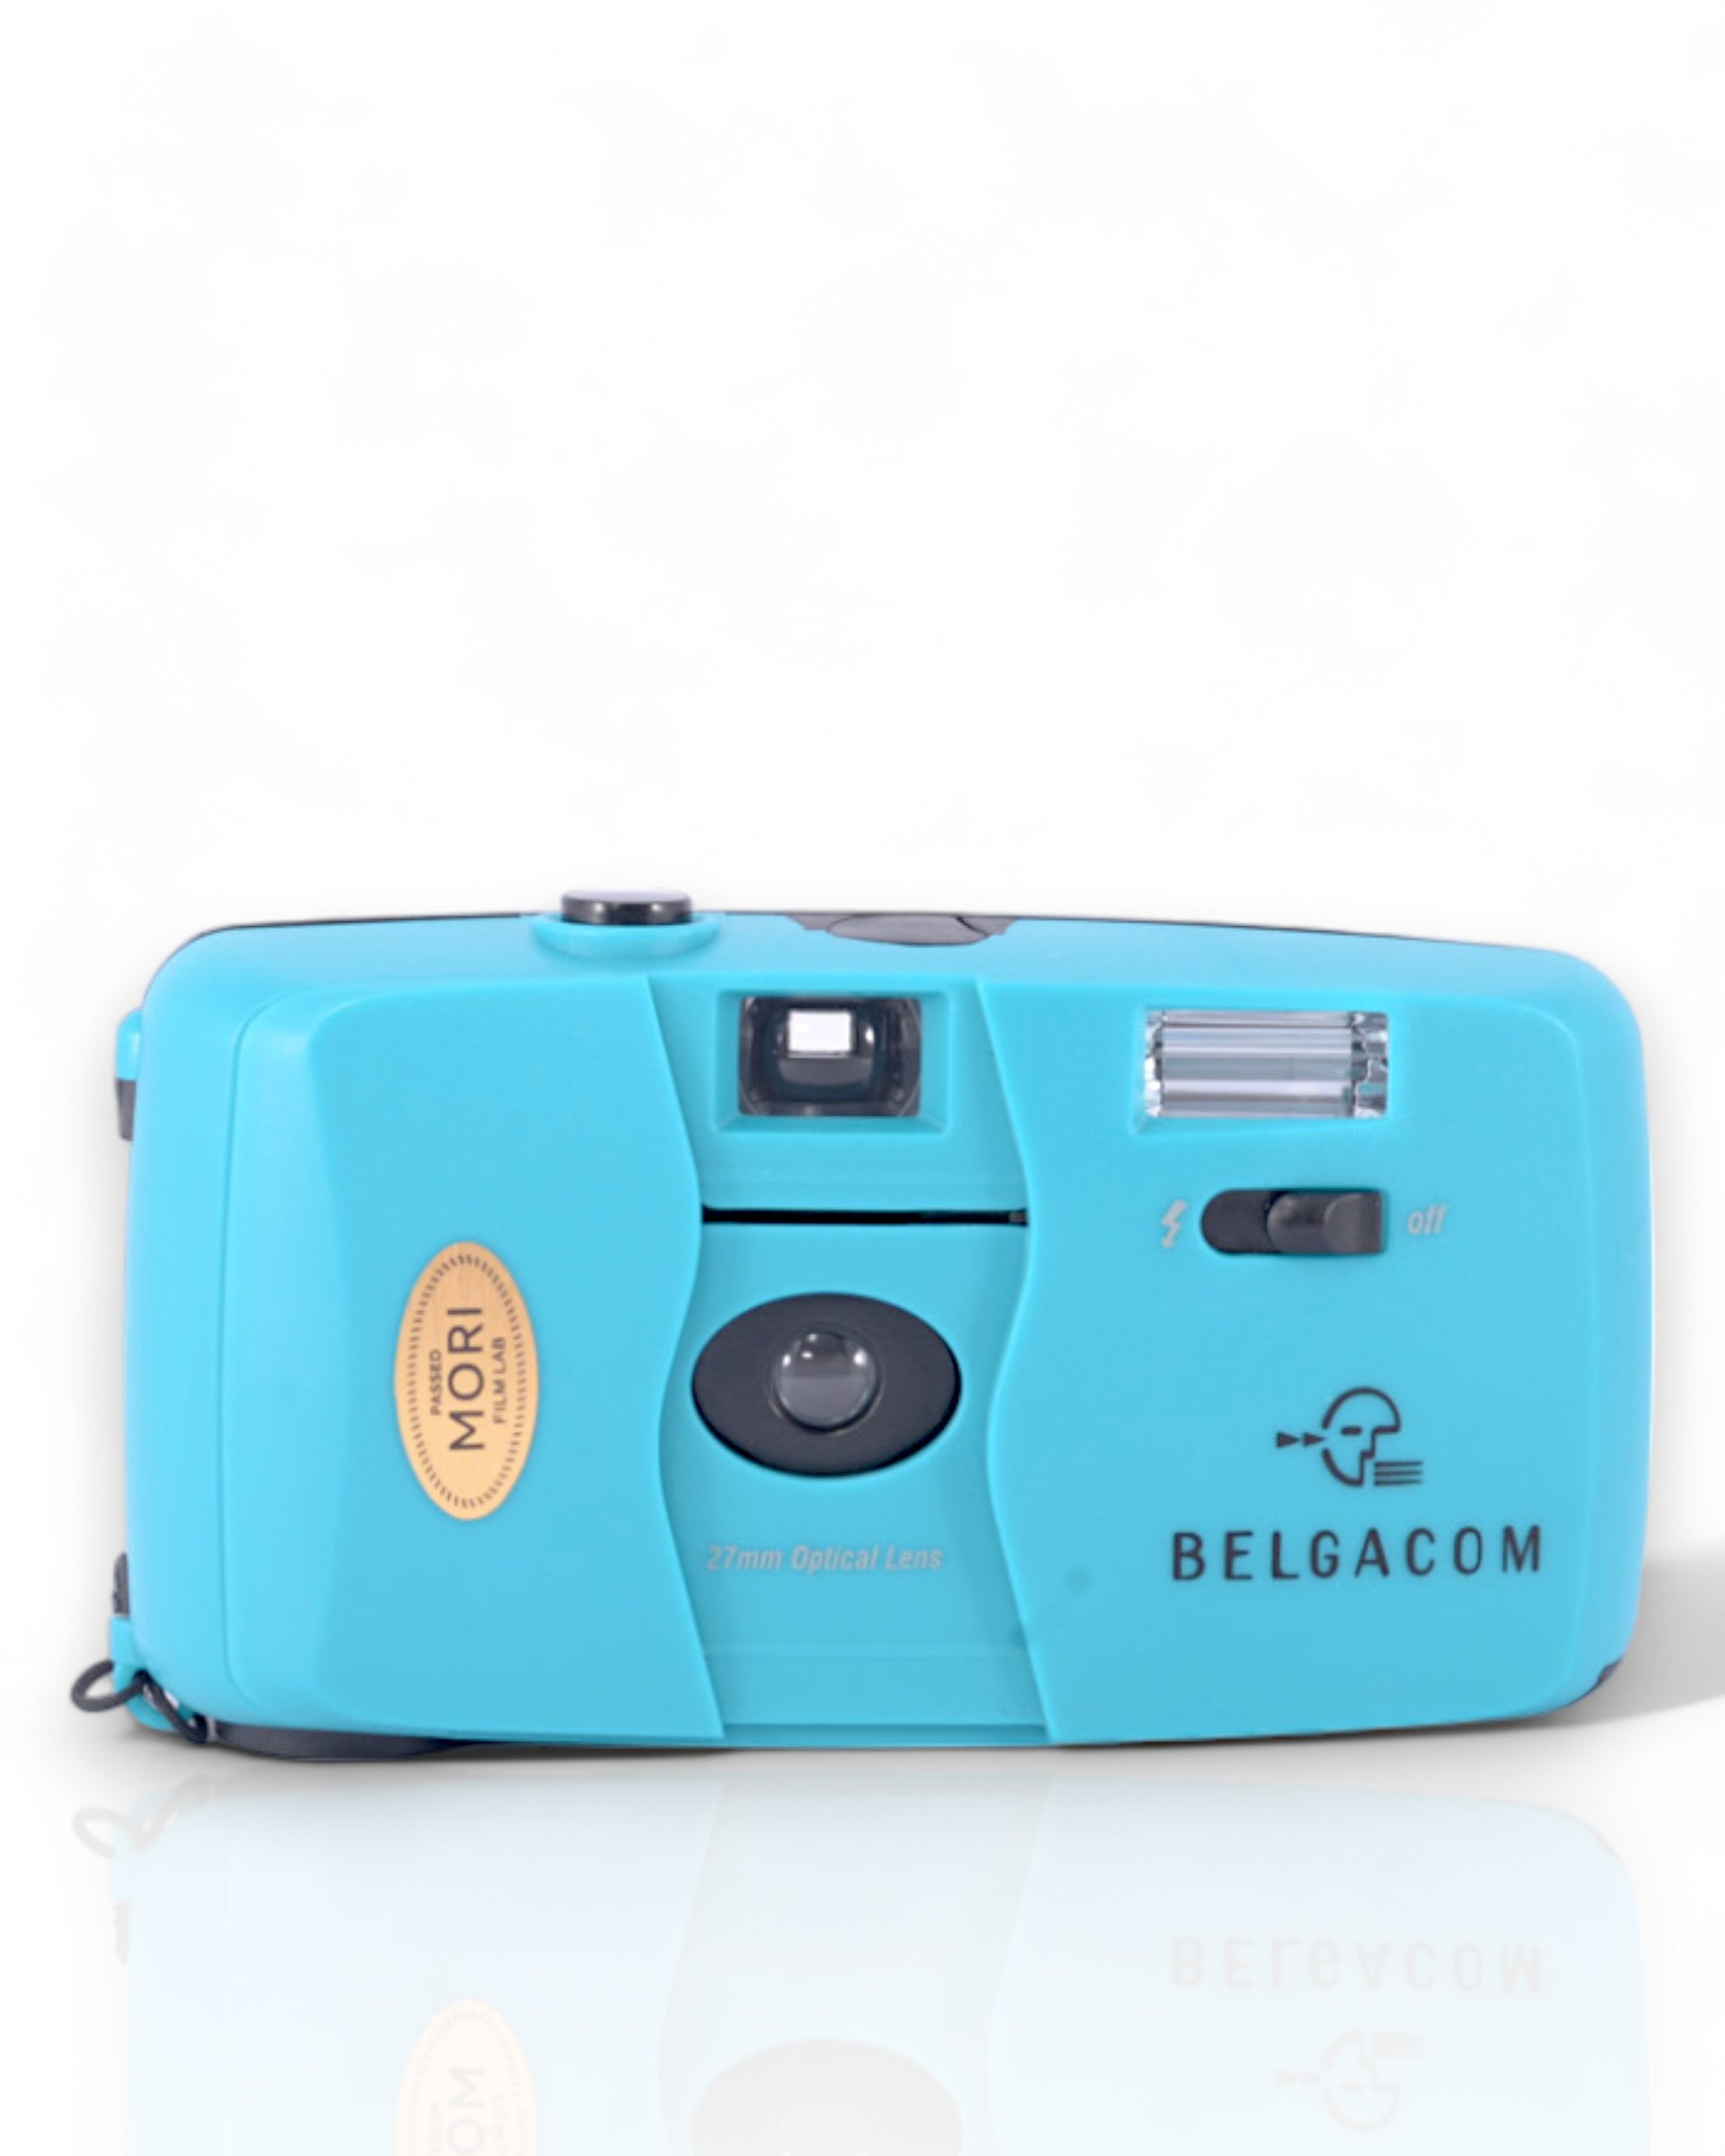 Belgacom 35mm Point & Shoot film camera with 27mm lens